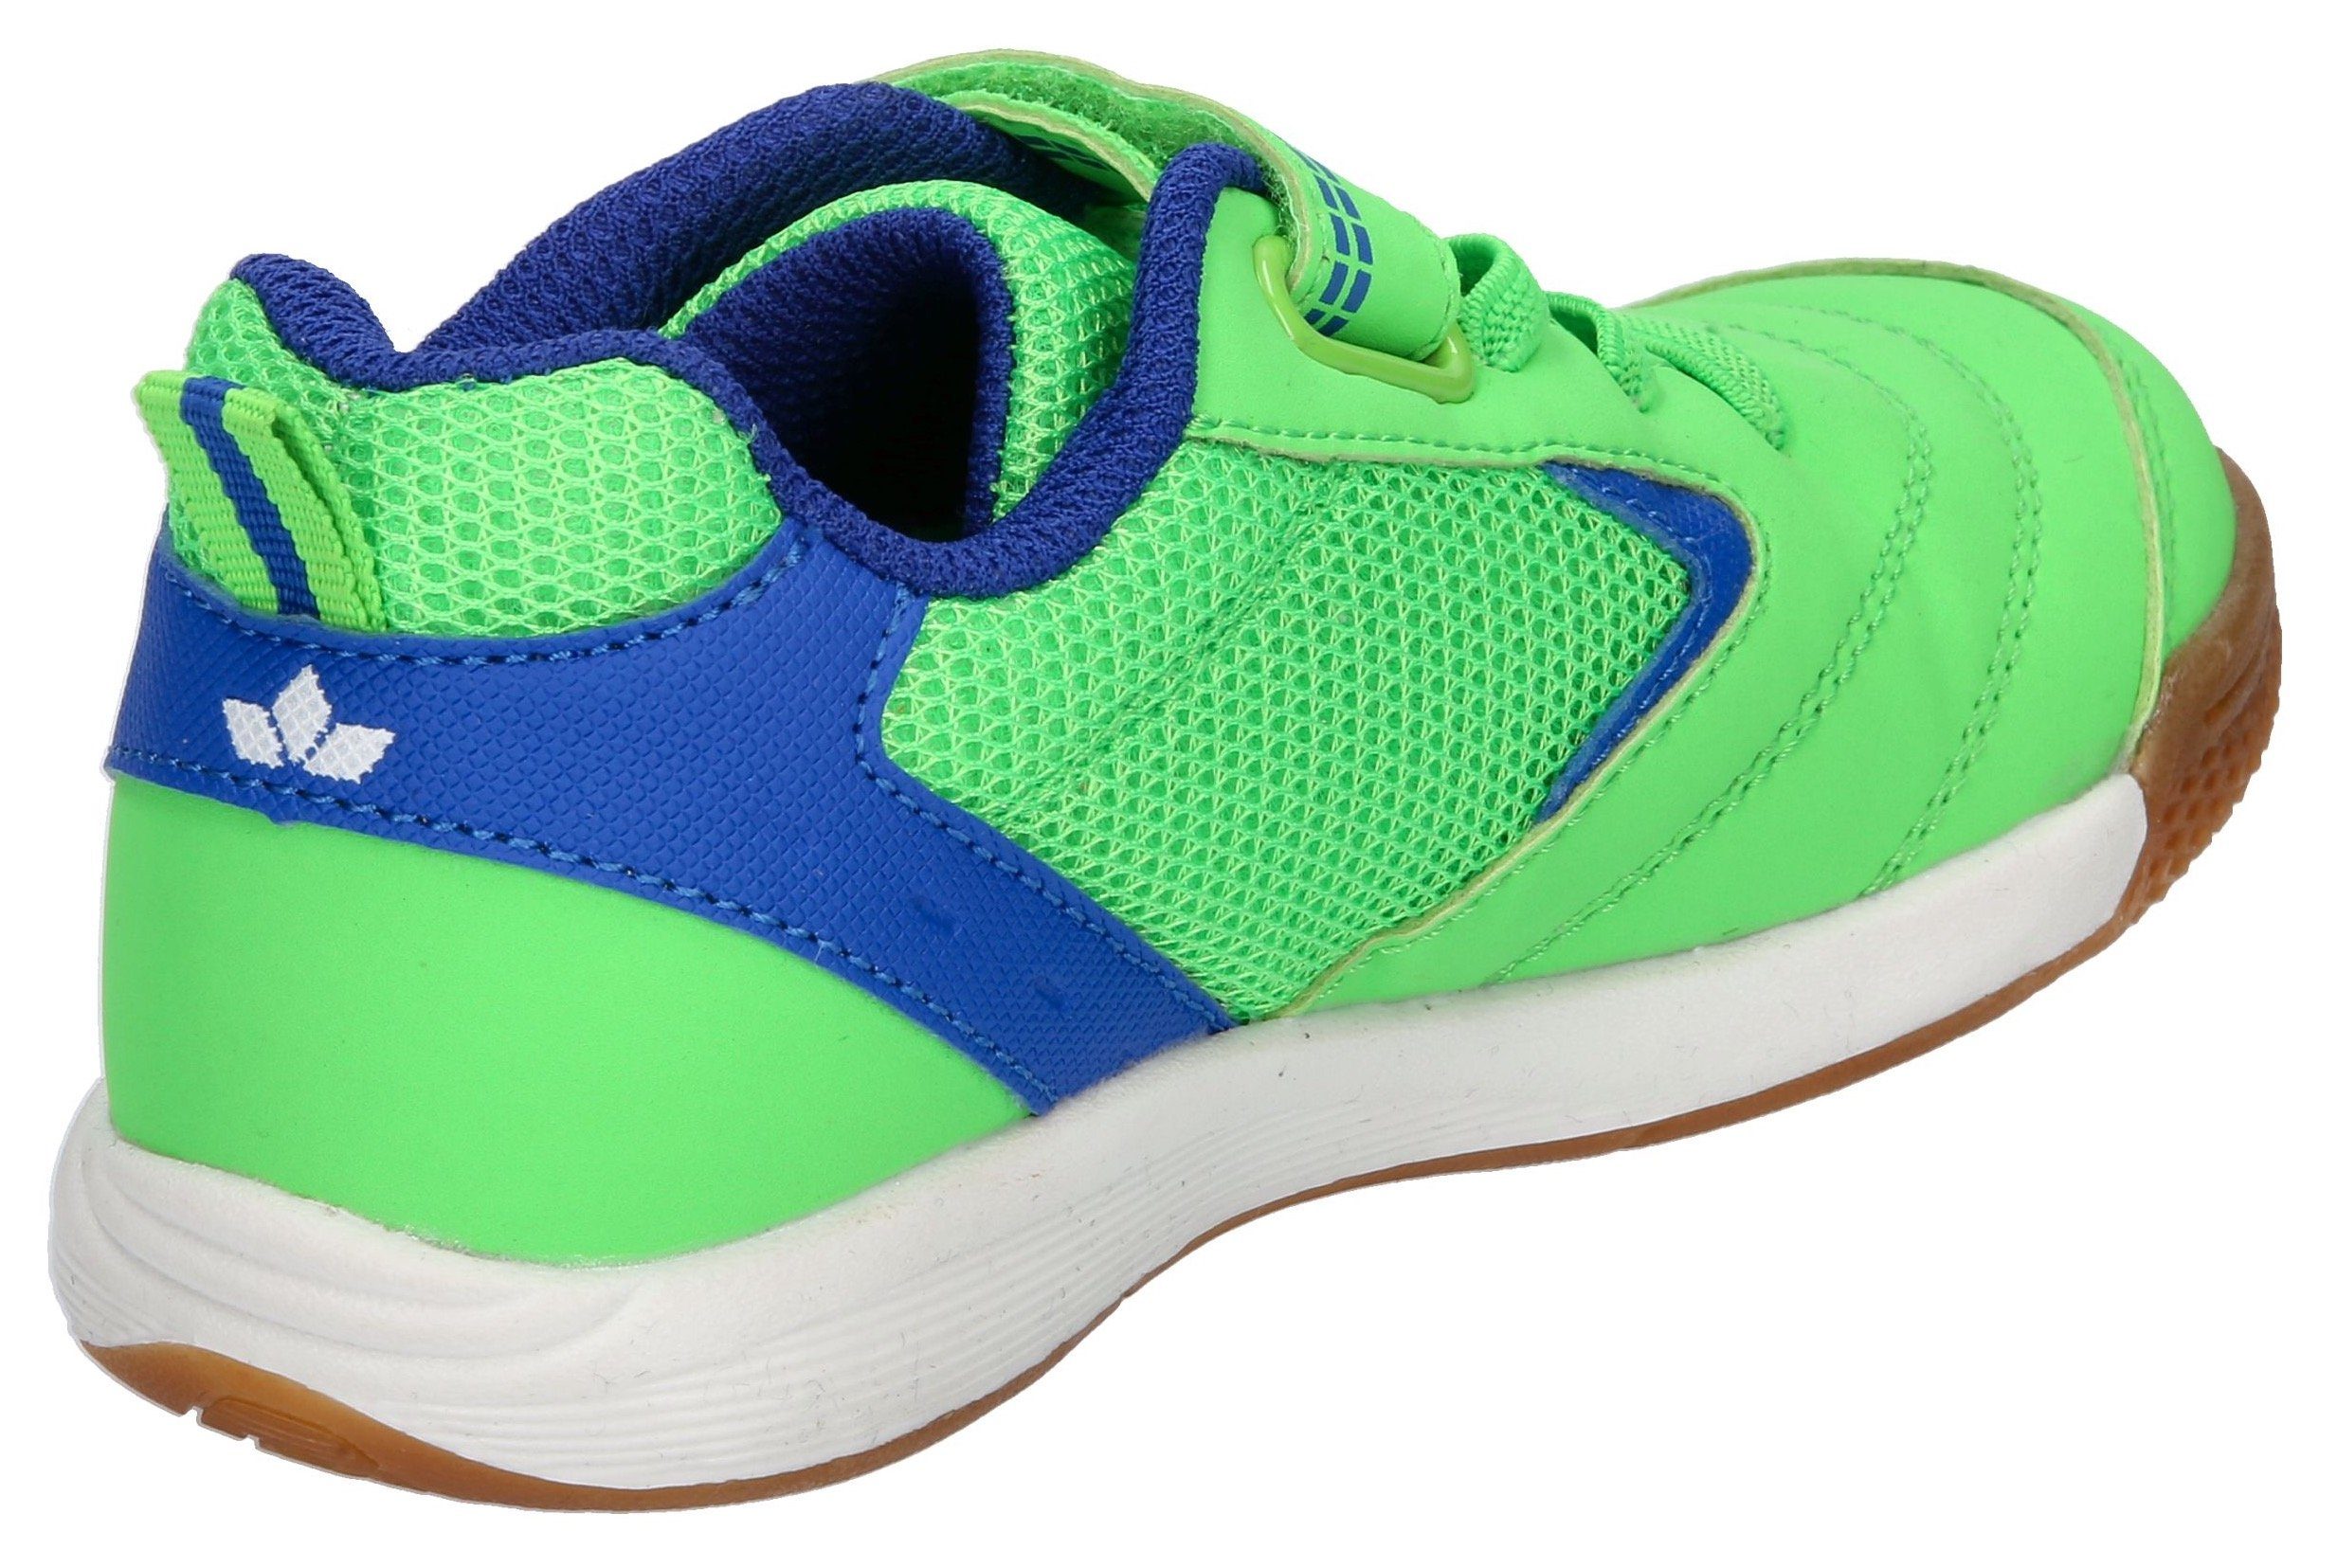 Lico Sneaker heller Laufsohle grün-blau Ari VS mit WMS